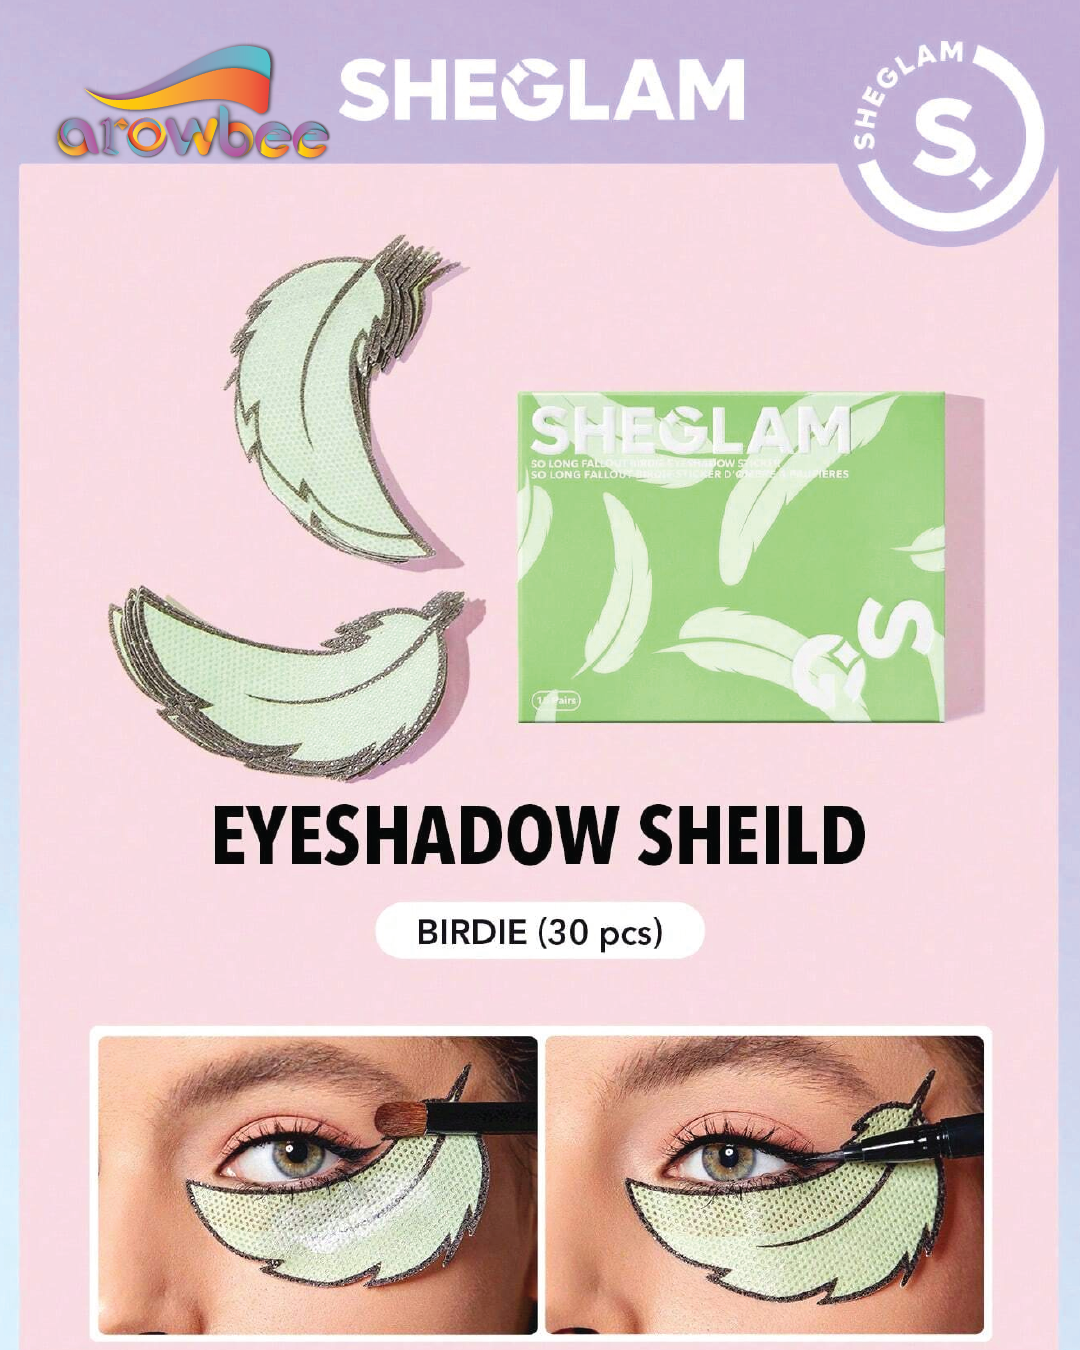 SHEGLAM So Long Fallout Mermaid Eyeshadow Sticker